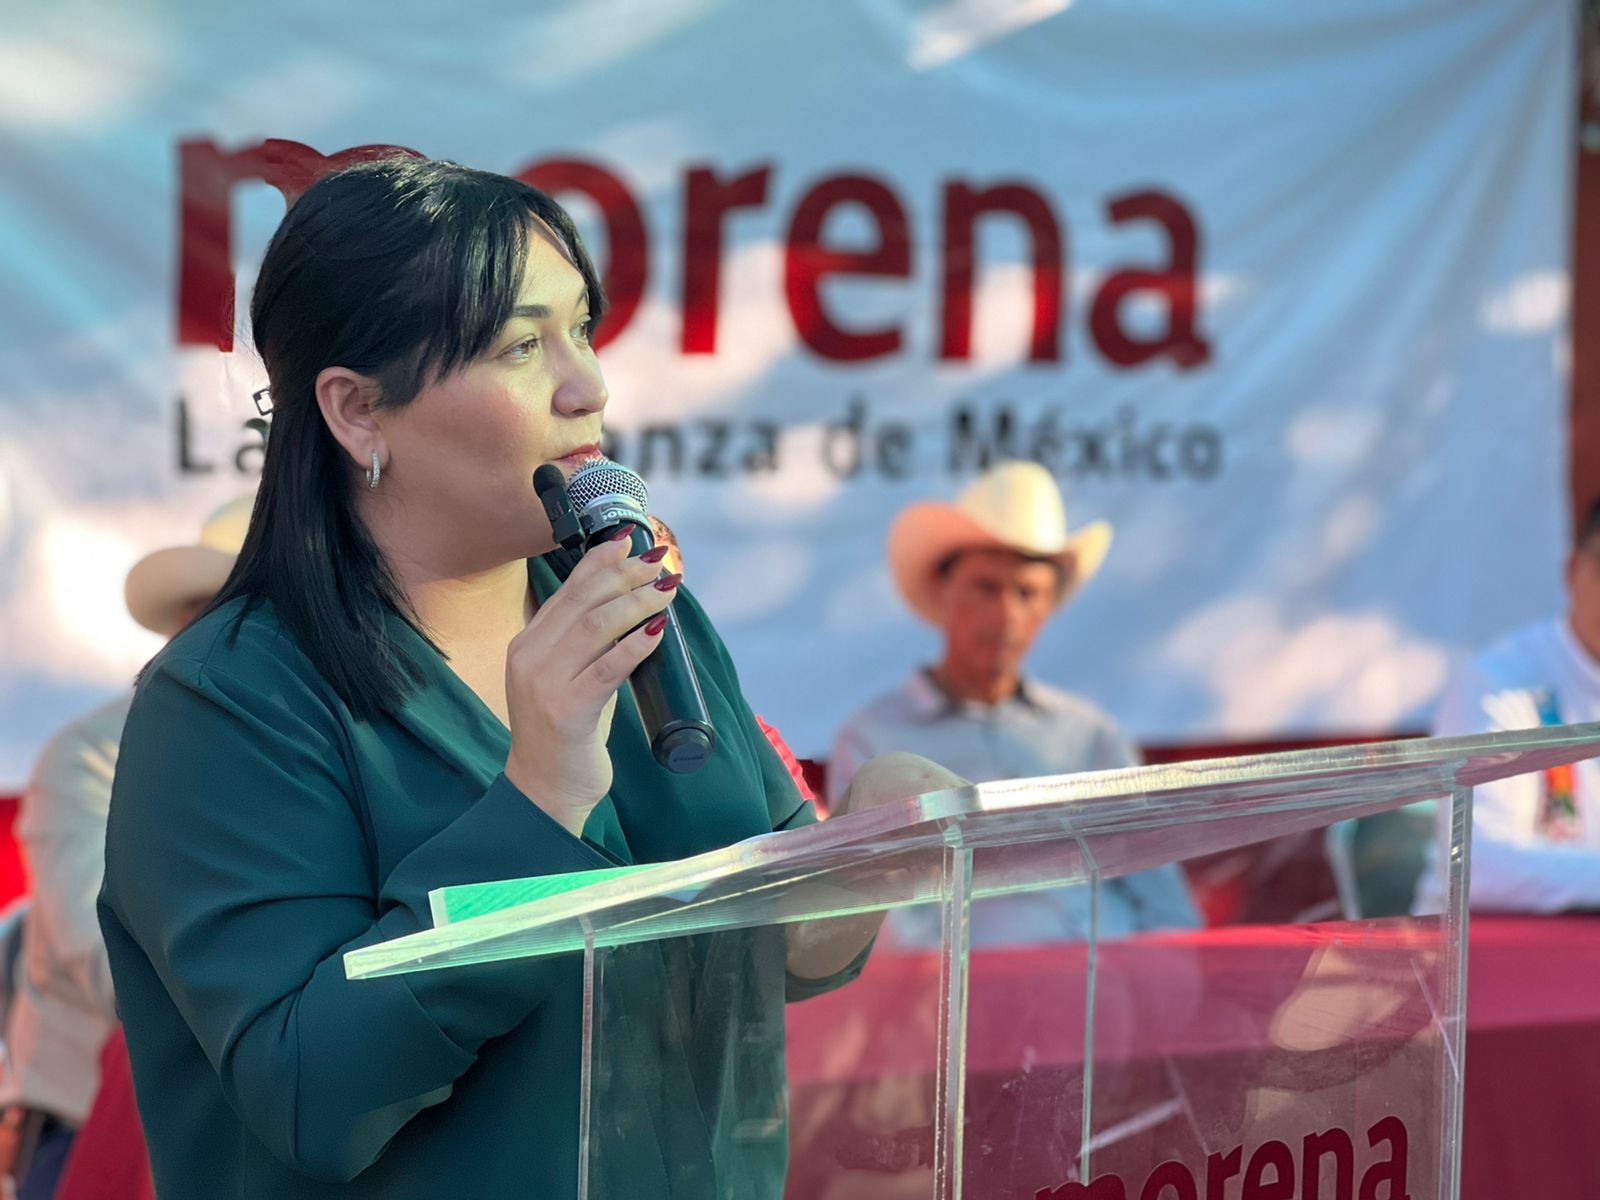 Gobernadora vulnera autonomía universitaria de la UACH: Morena